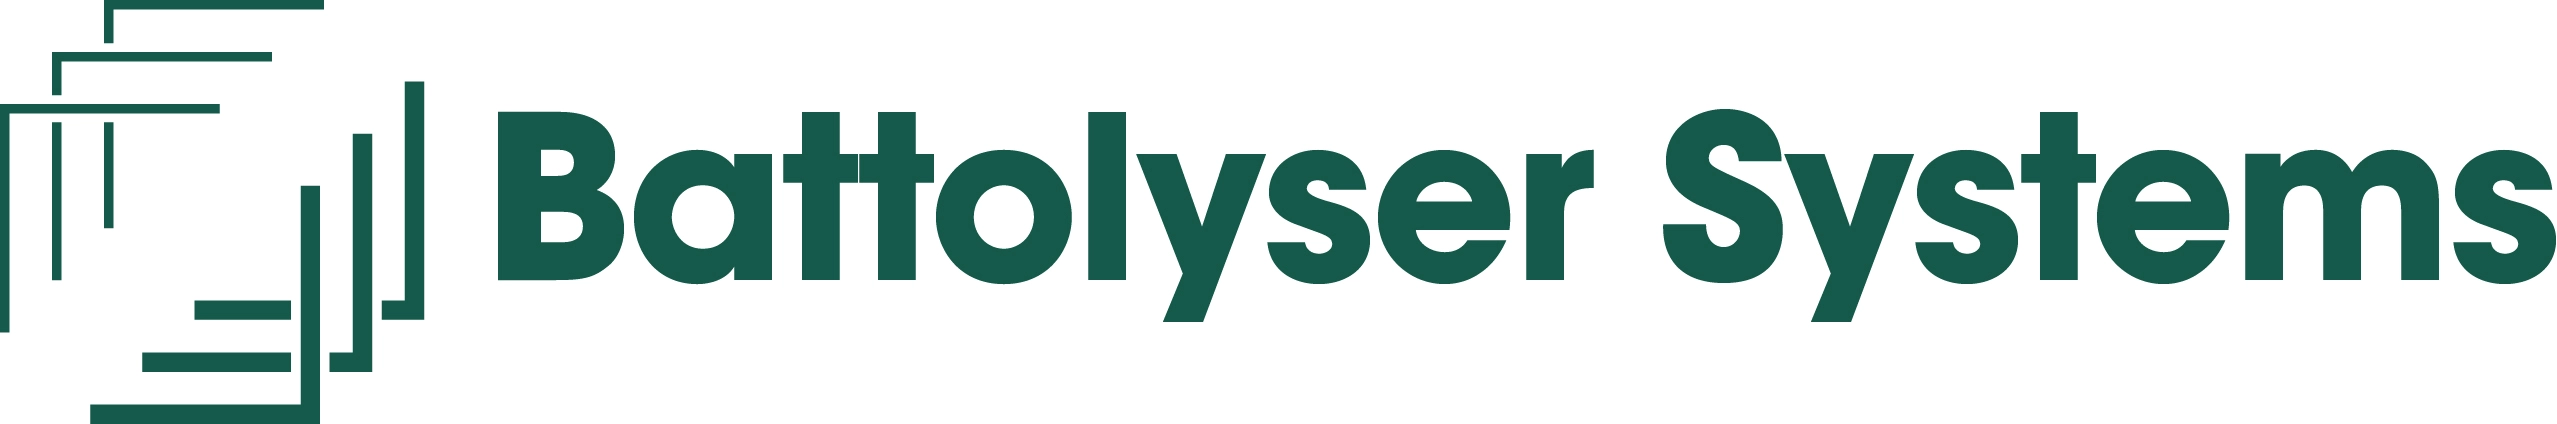 Battolyser Systems logo in dark green